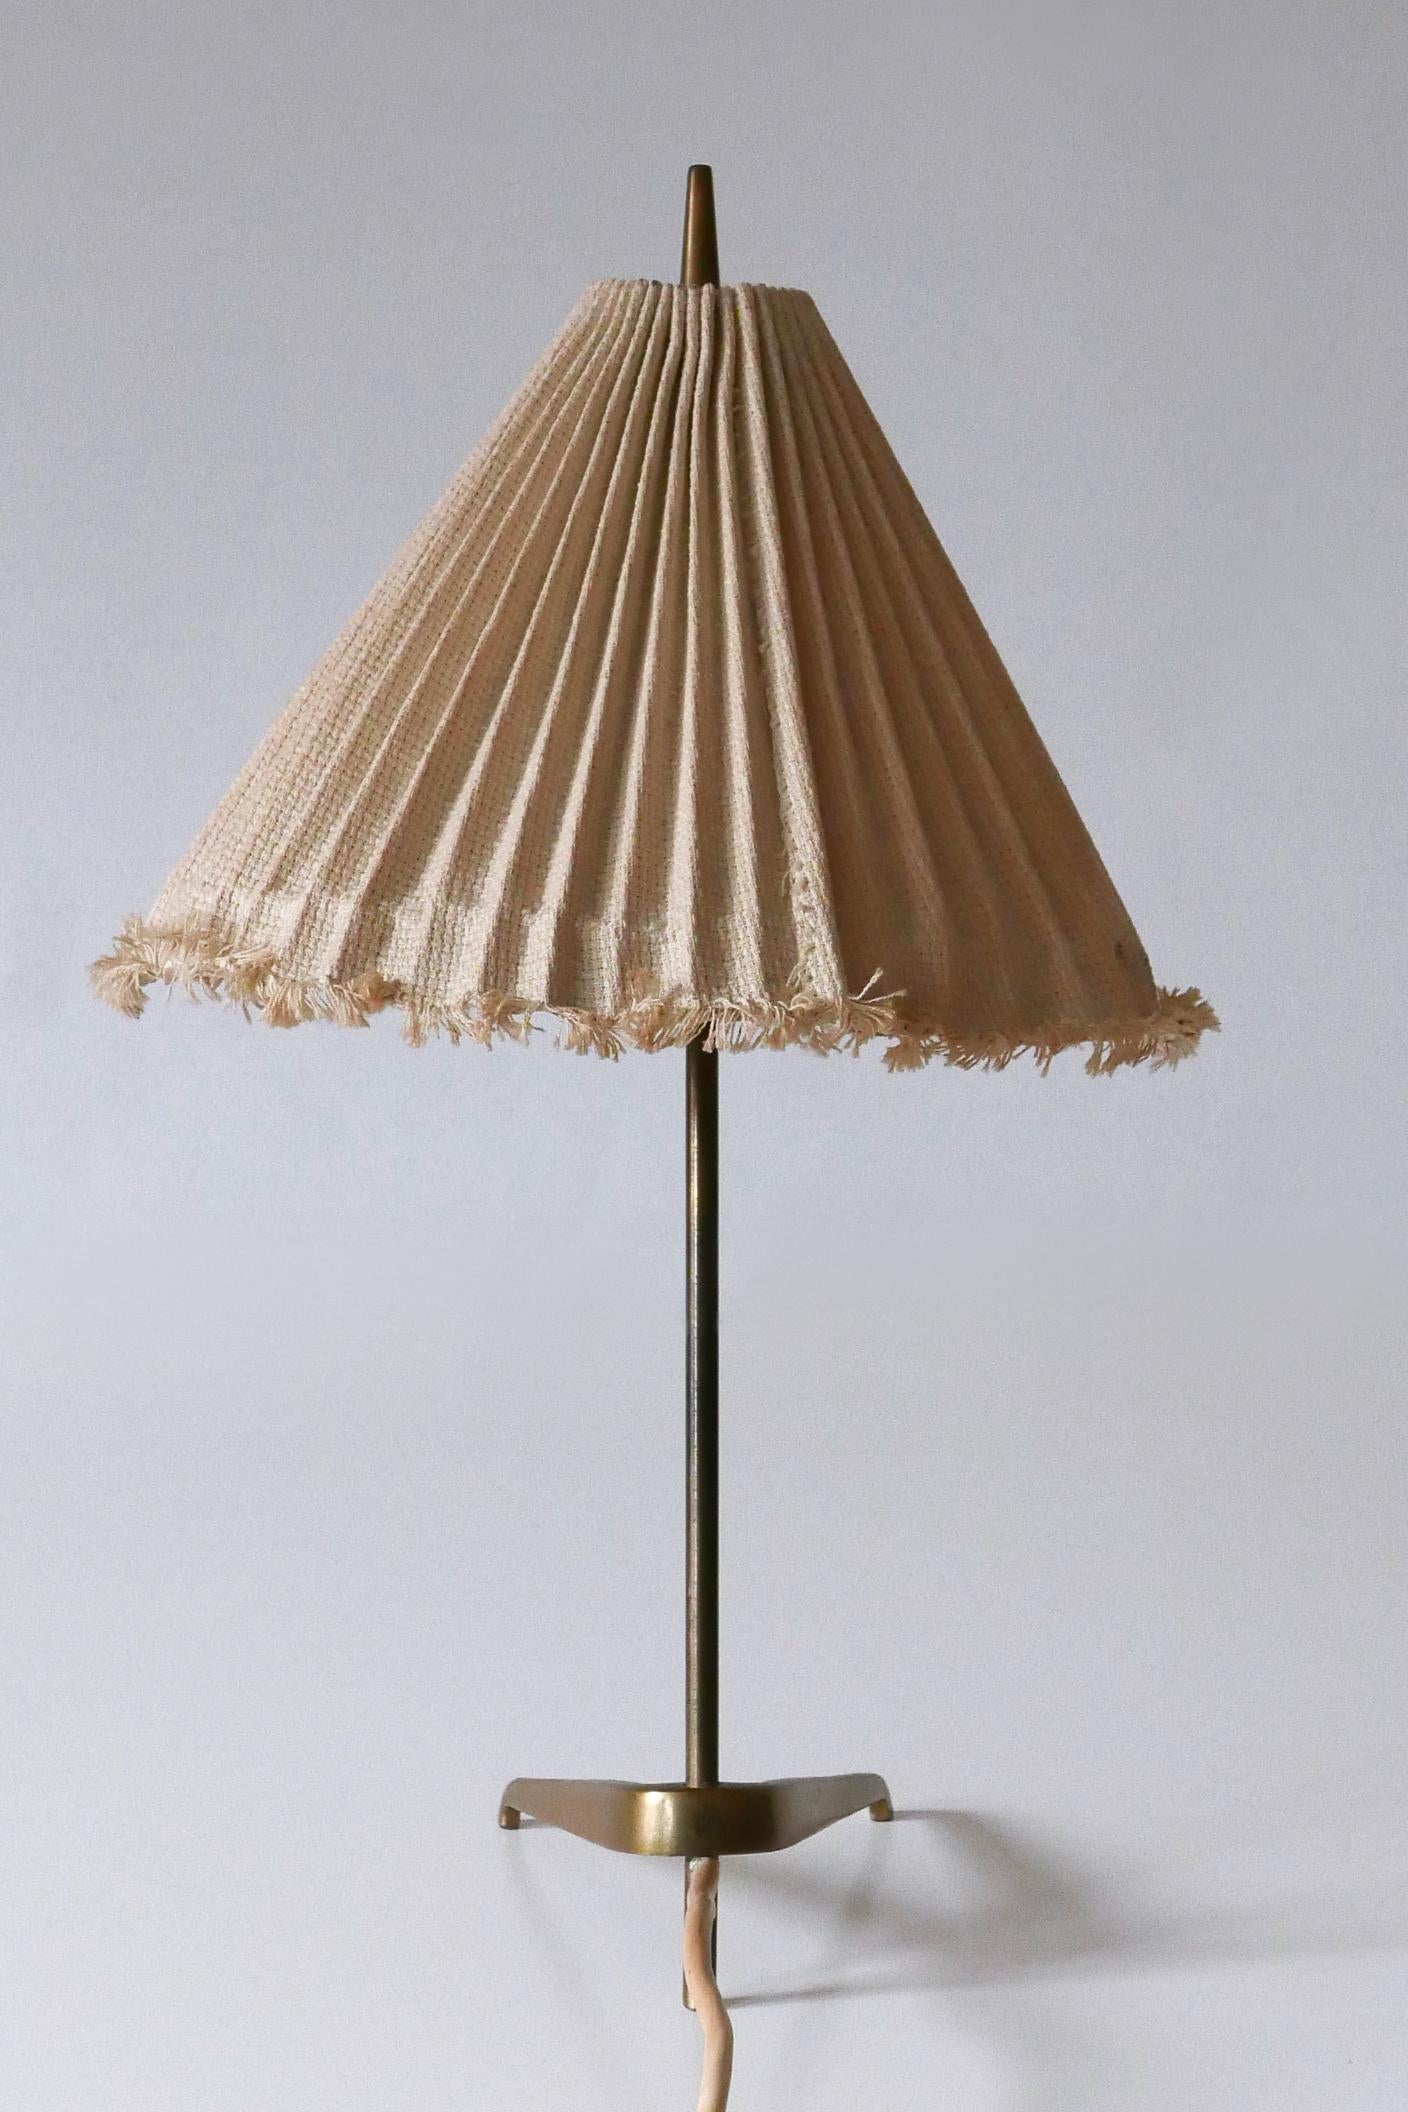 Rare Mid-Century Modern Brass Crowfoot Table Lamp by J.T. Kalmar Austria 1950s For Sale 13